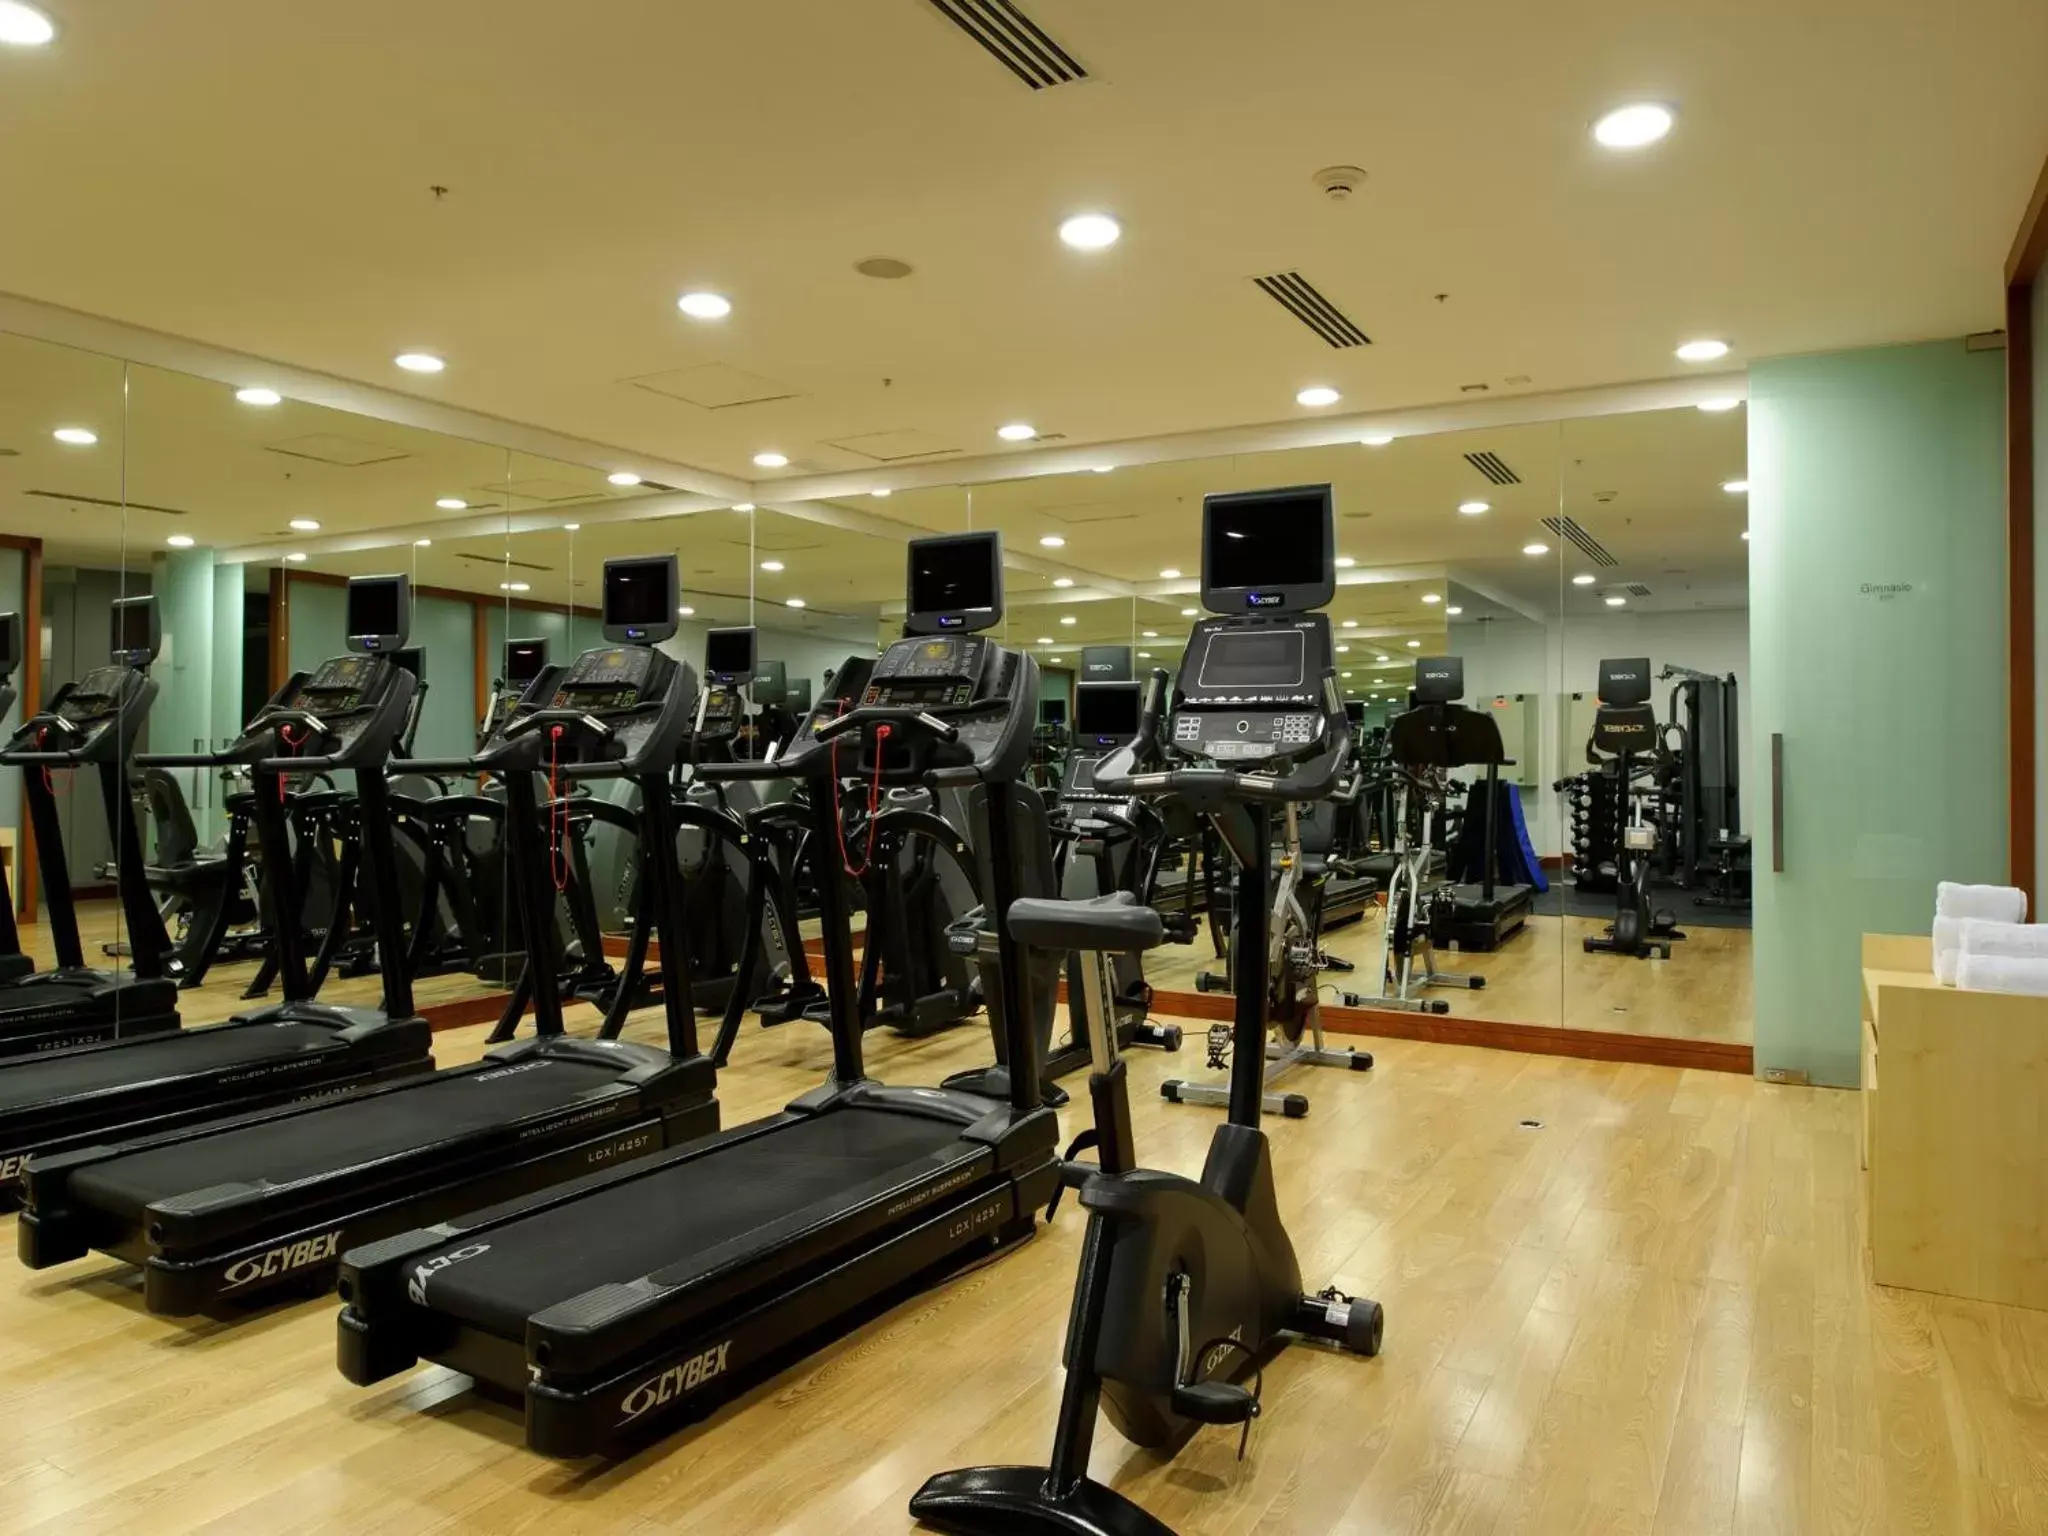 Fitness centre/facilities, Fitness Center/Facilities in NOI Vitacura